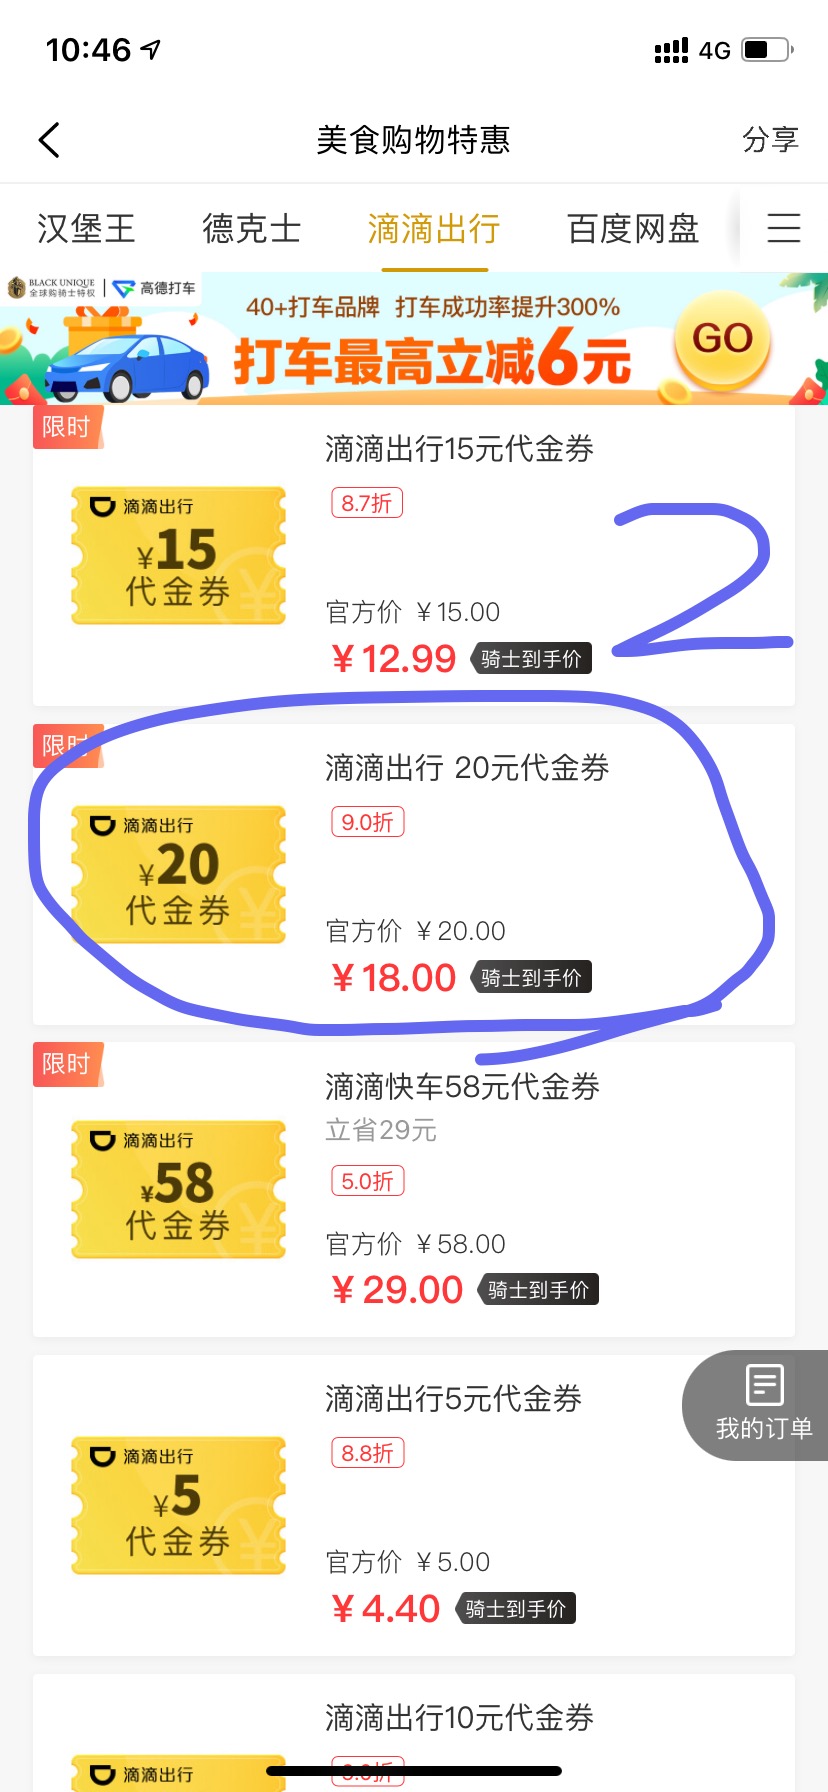 YSF  1号12块利润  抓紧上-惠小助(52huixz.com)